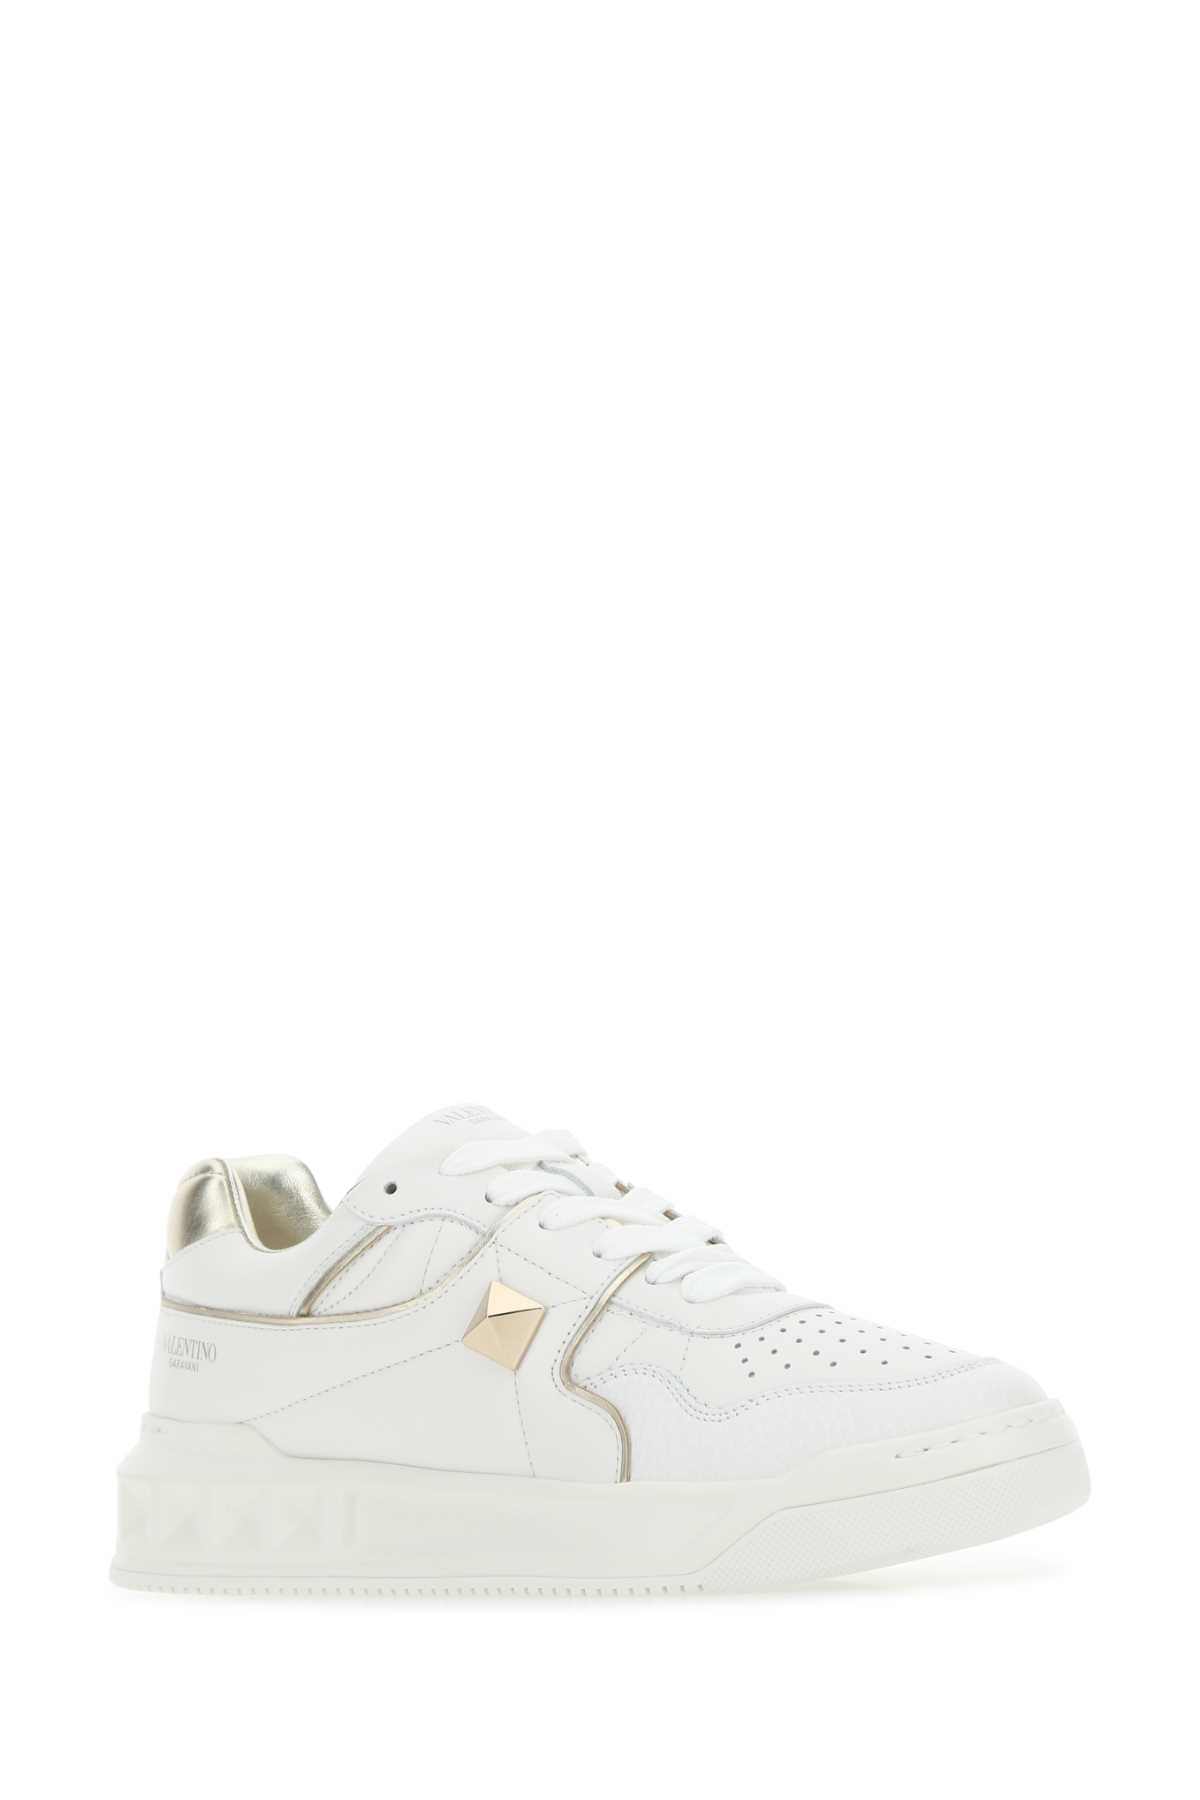 Shop Valentino White Nappa Leather One Stud Sneakers In Biancoplatinobiancoplatinobianco